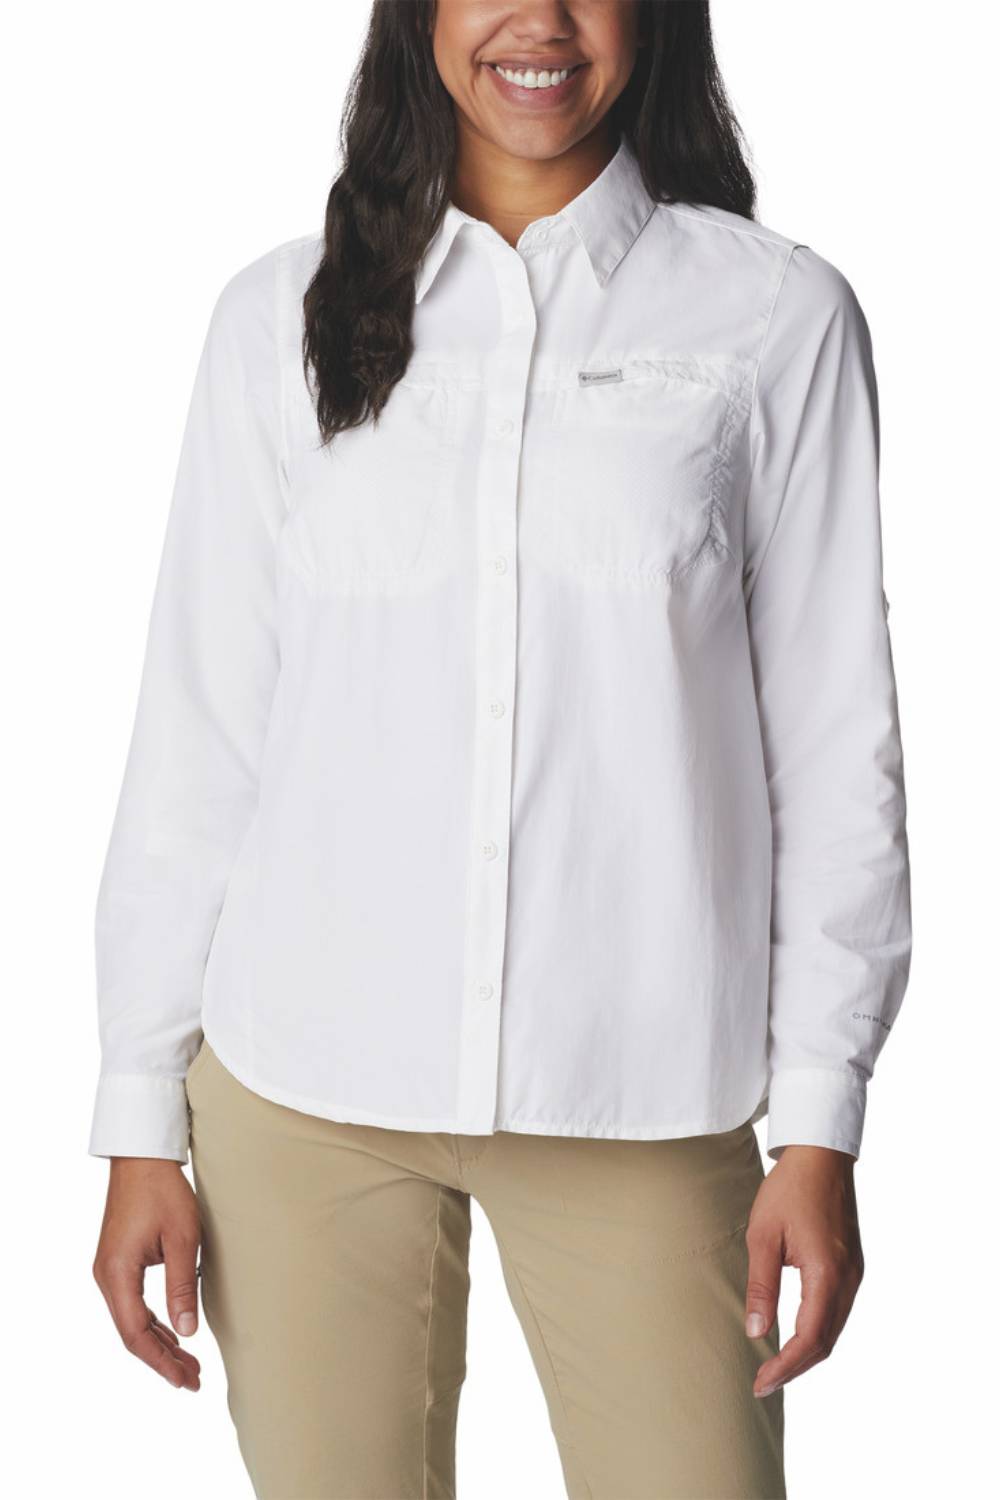 Women's Long Sleeve Anti-UV Shirt - Silver Ridge 3.0 - Columbia – KER SUN